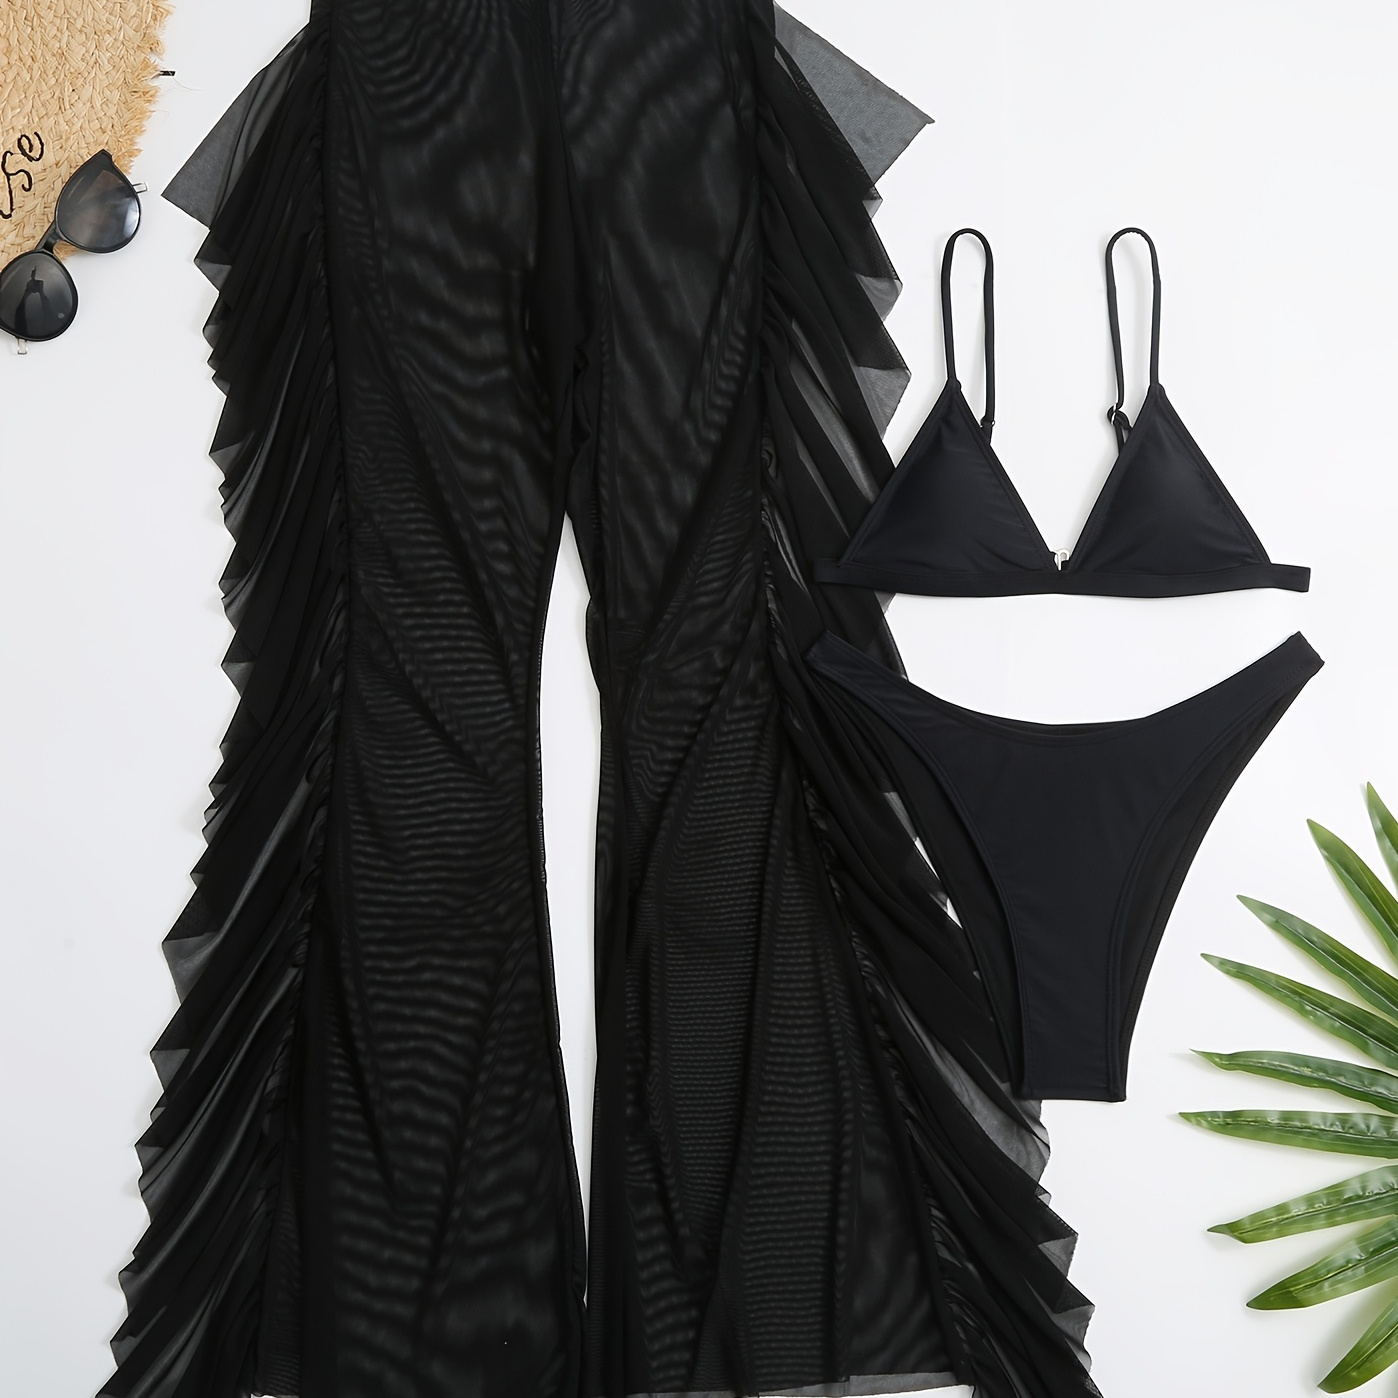 

3-piece Black Triangle High Cut Bikini Sets, With Ruffled Side Deco Sheer Cover Up Pants, Women's Swimwear & Clothing